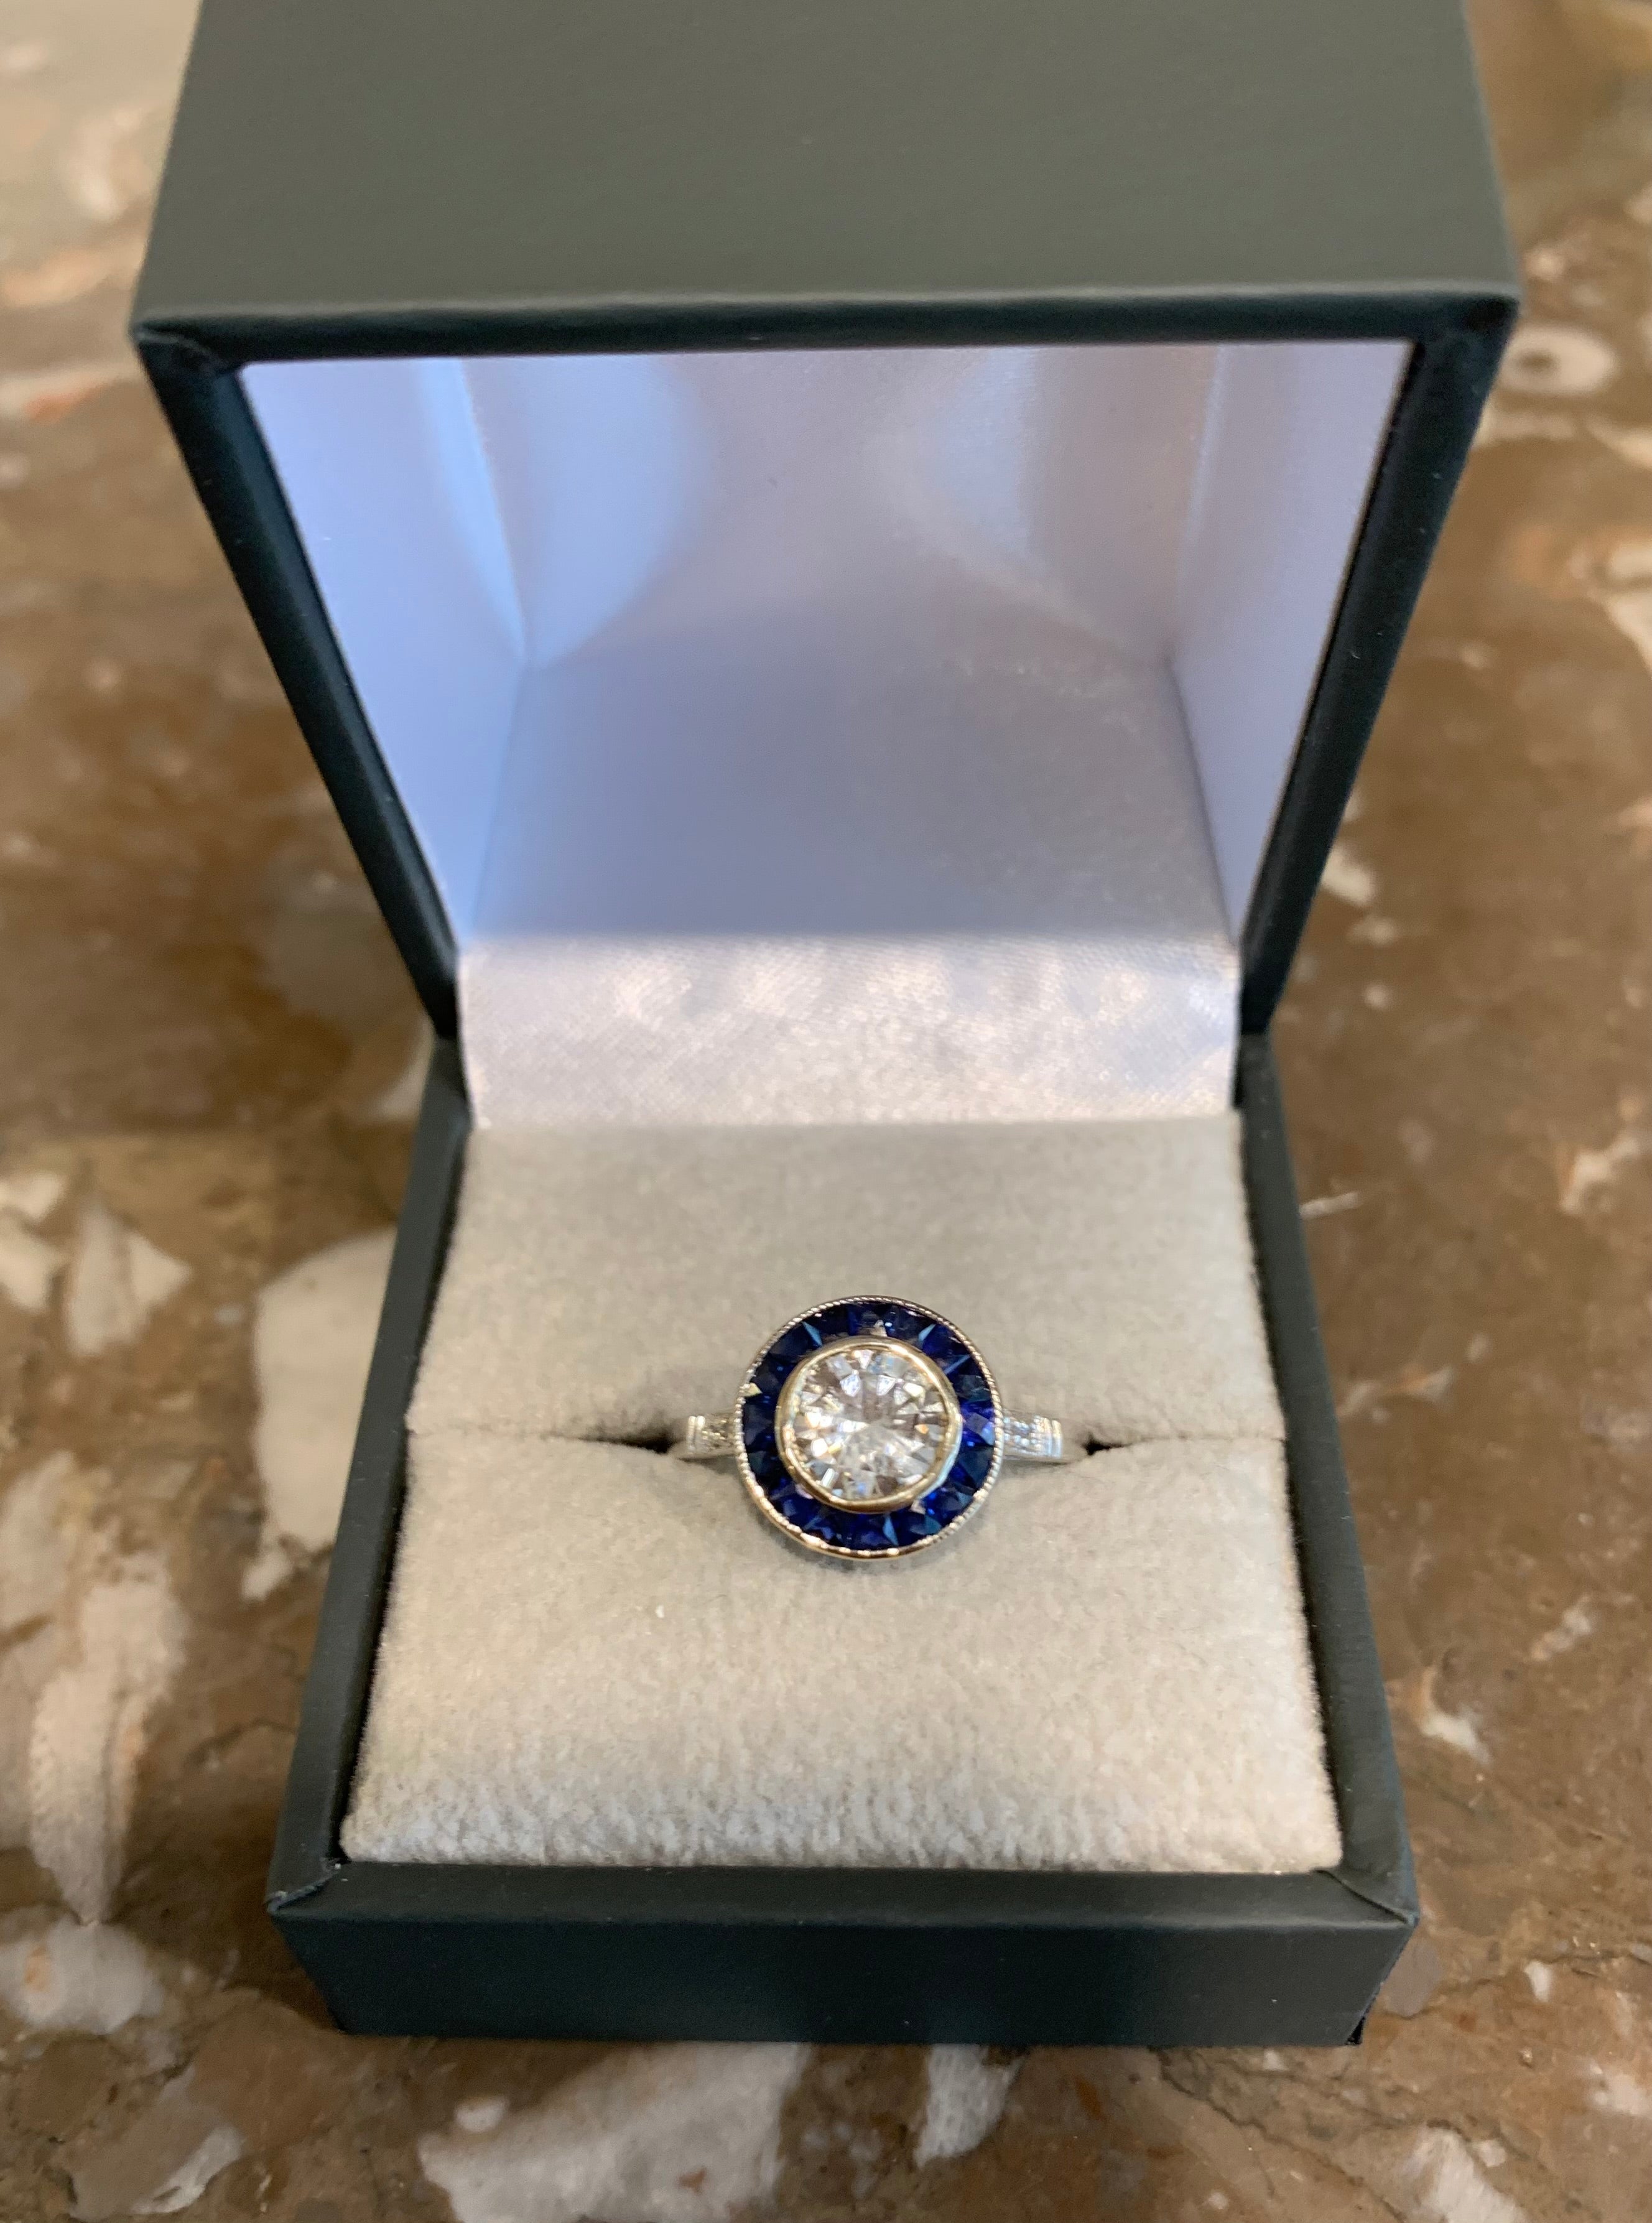 Certified 1 Carat Diamonds Sapphires 18 Carat White Gold Art Deco Style Ring